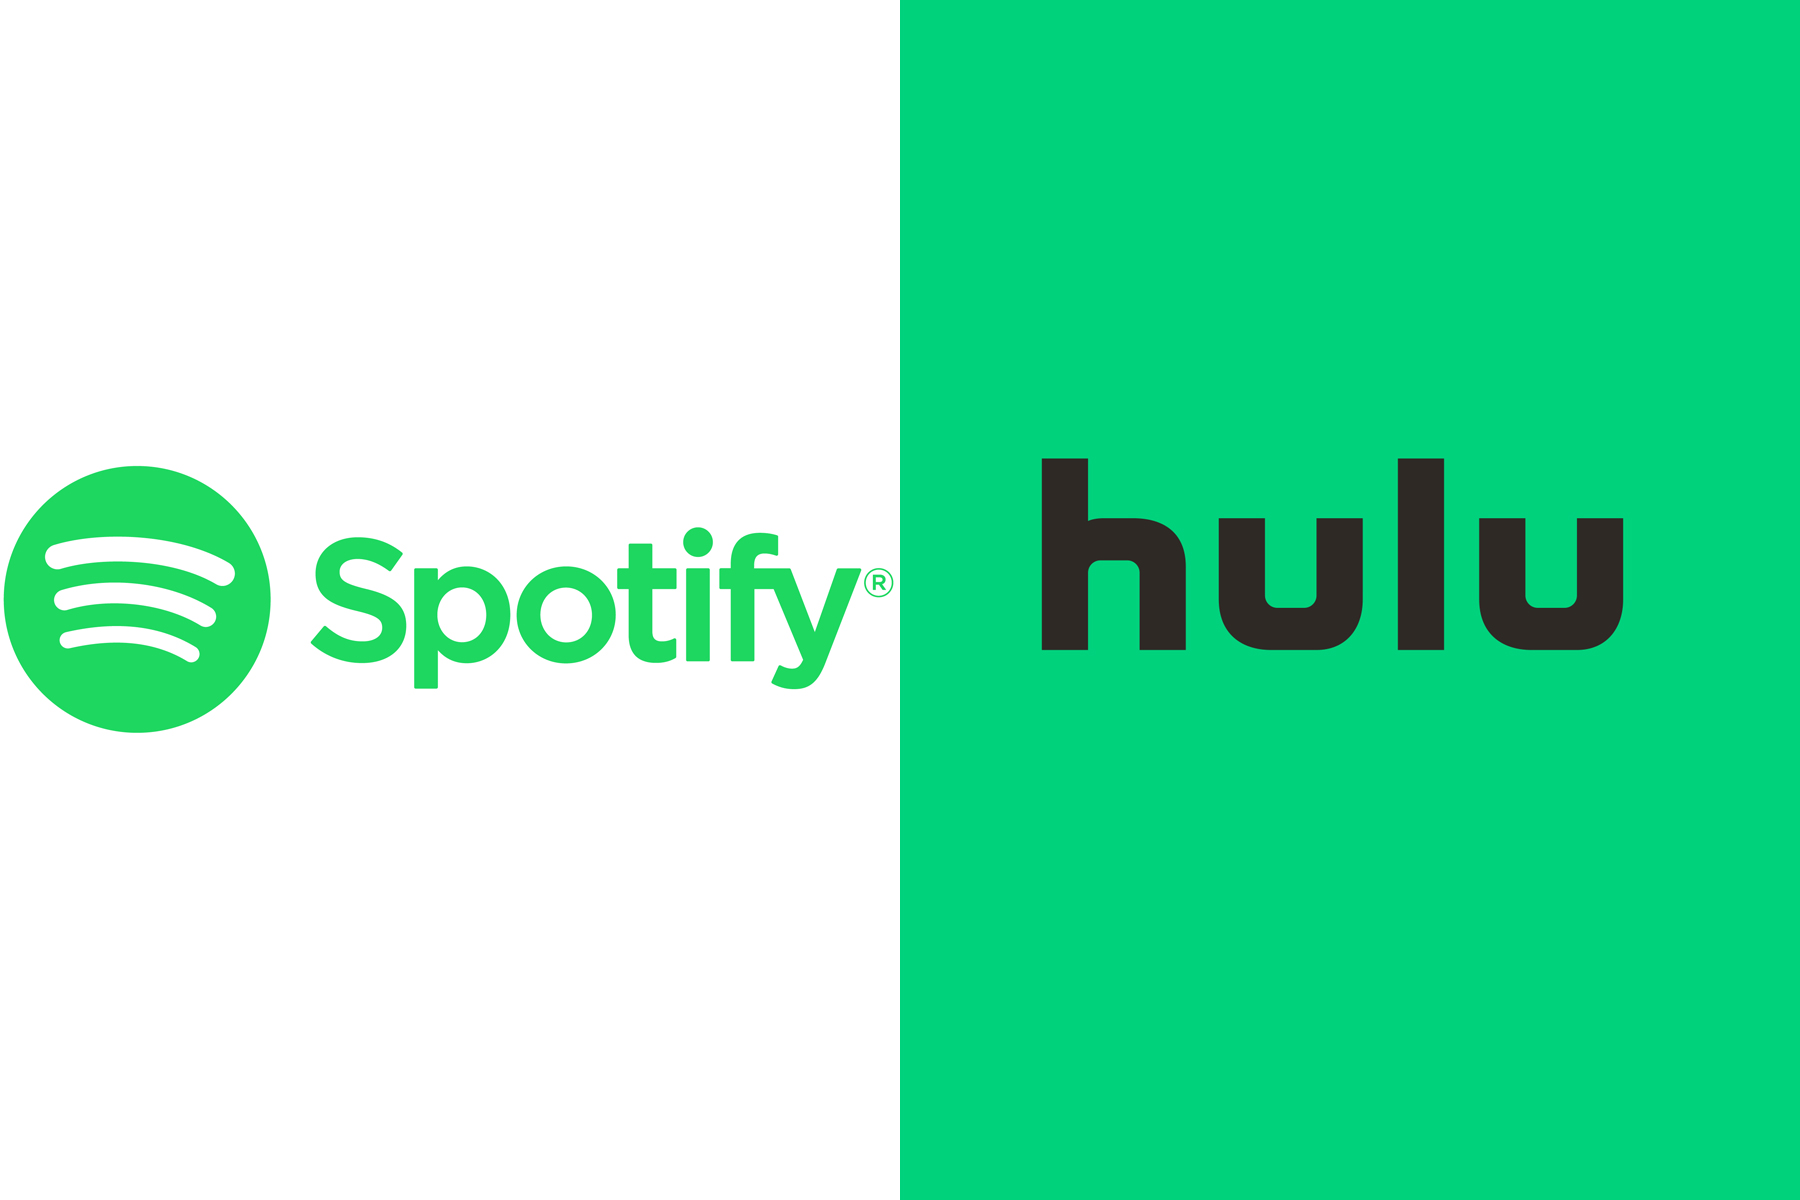 Is Hulu On Spotify Free